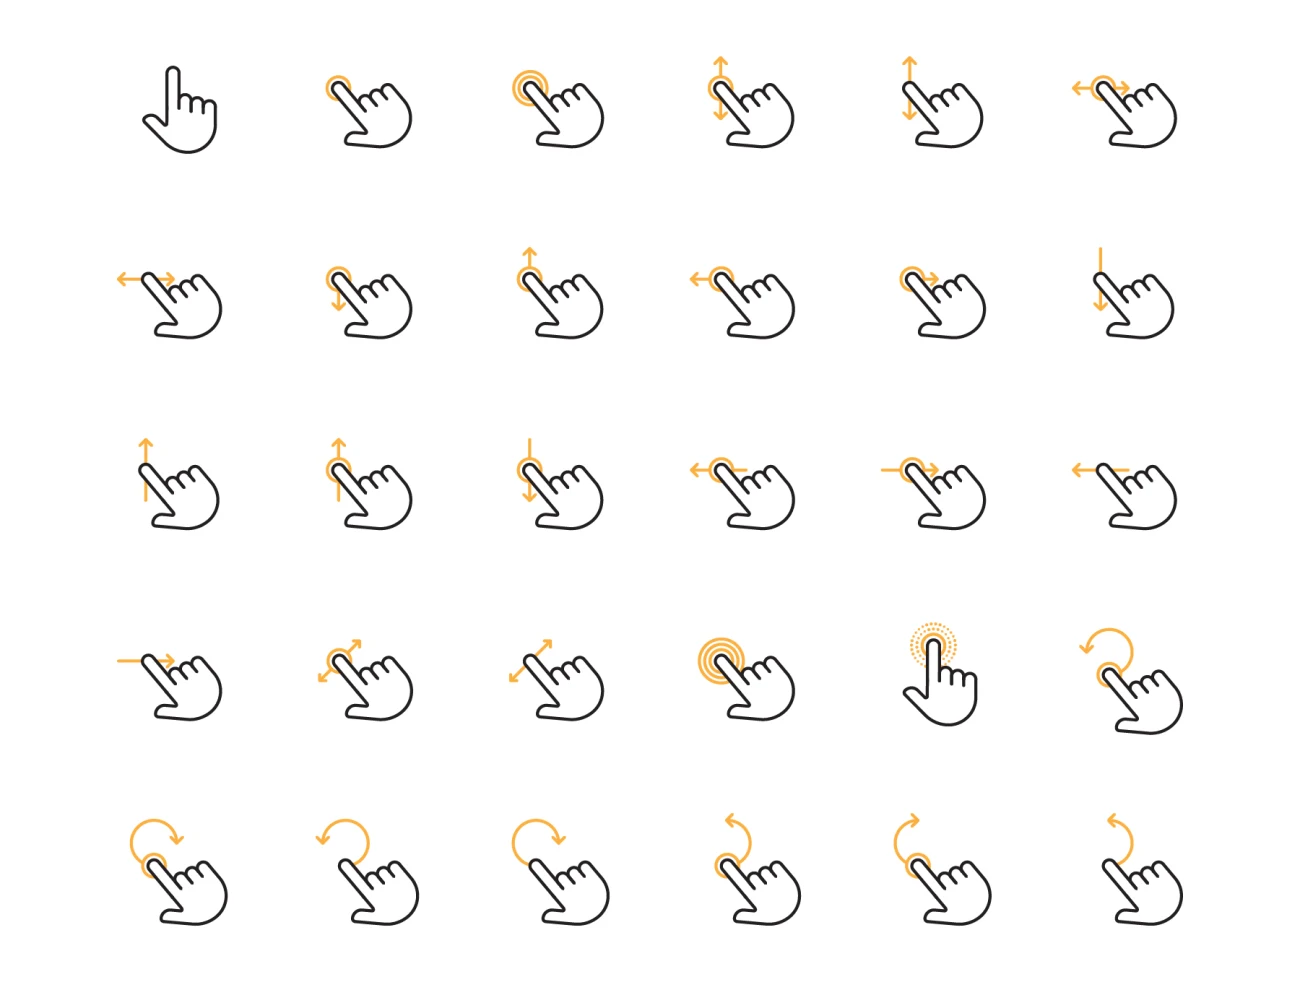 300款手势操作图标素材下载 300 Hand Gesture Icon Set .svg .png .jpeg插图5